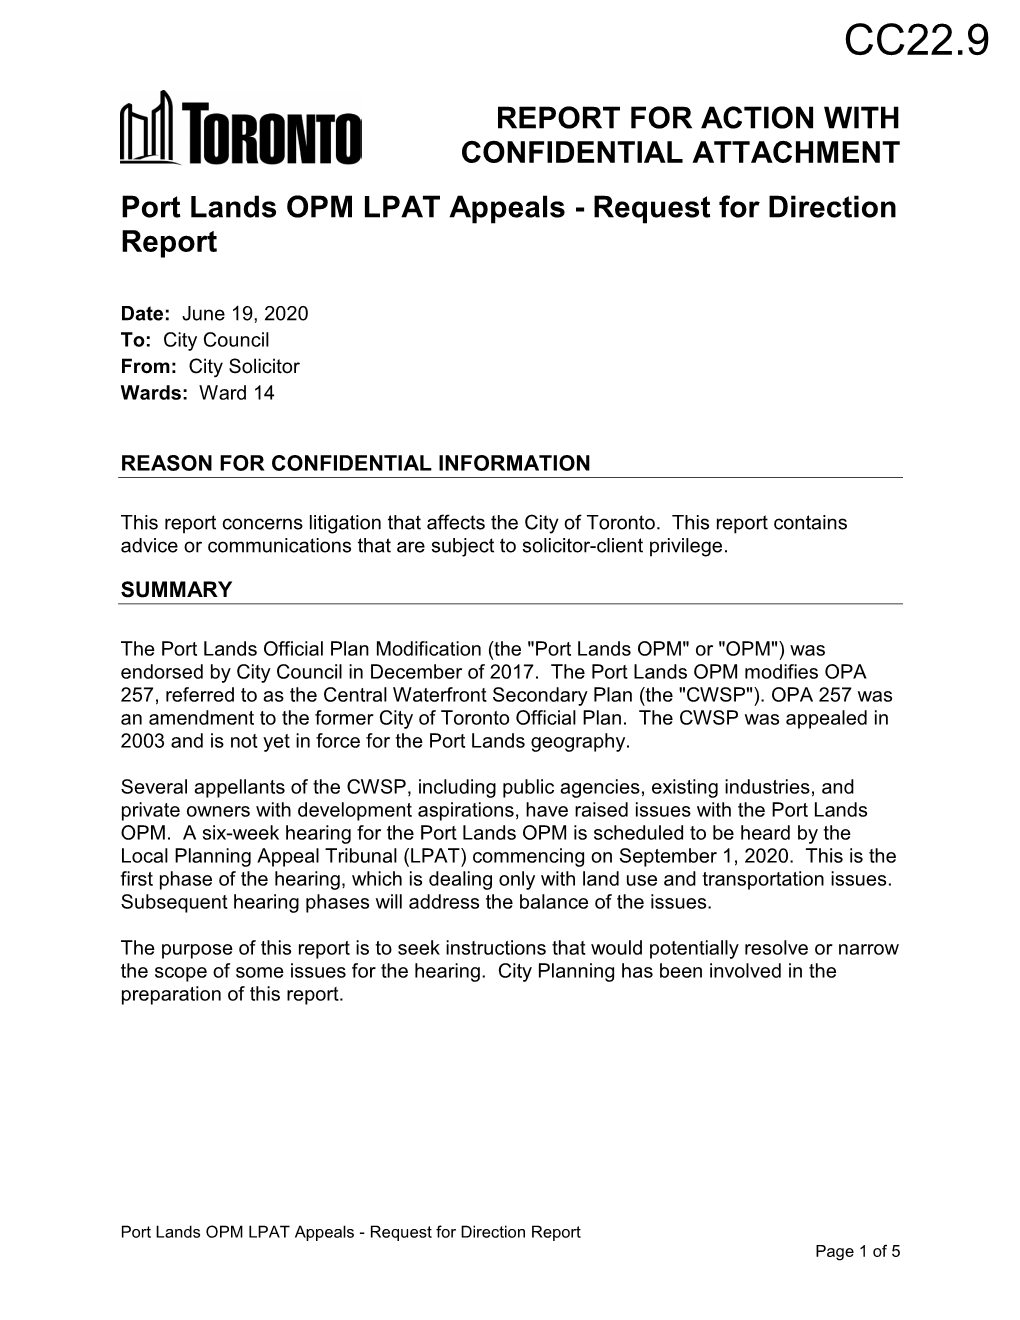 Port Lands OPM LPAT Appeals - Request for Direction Report